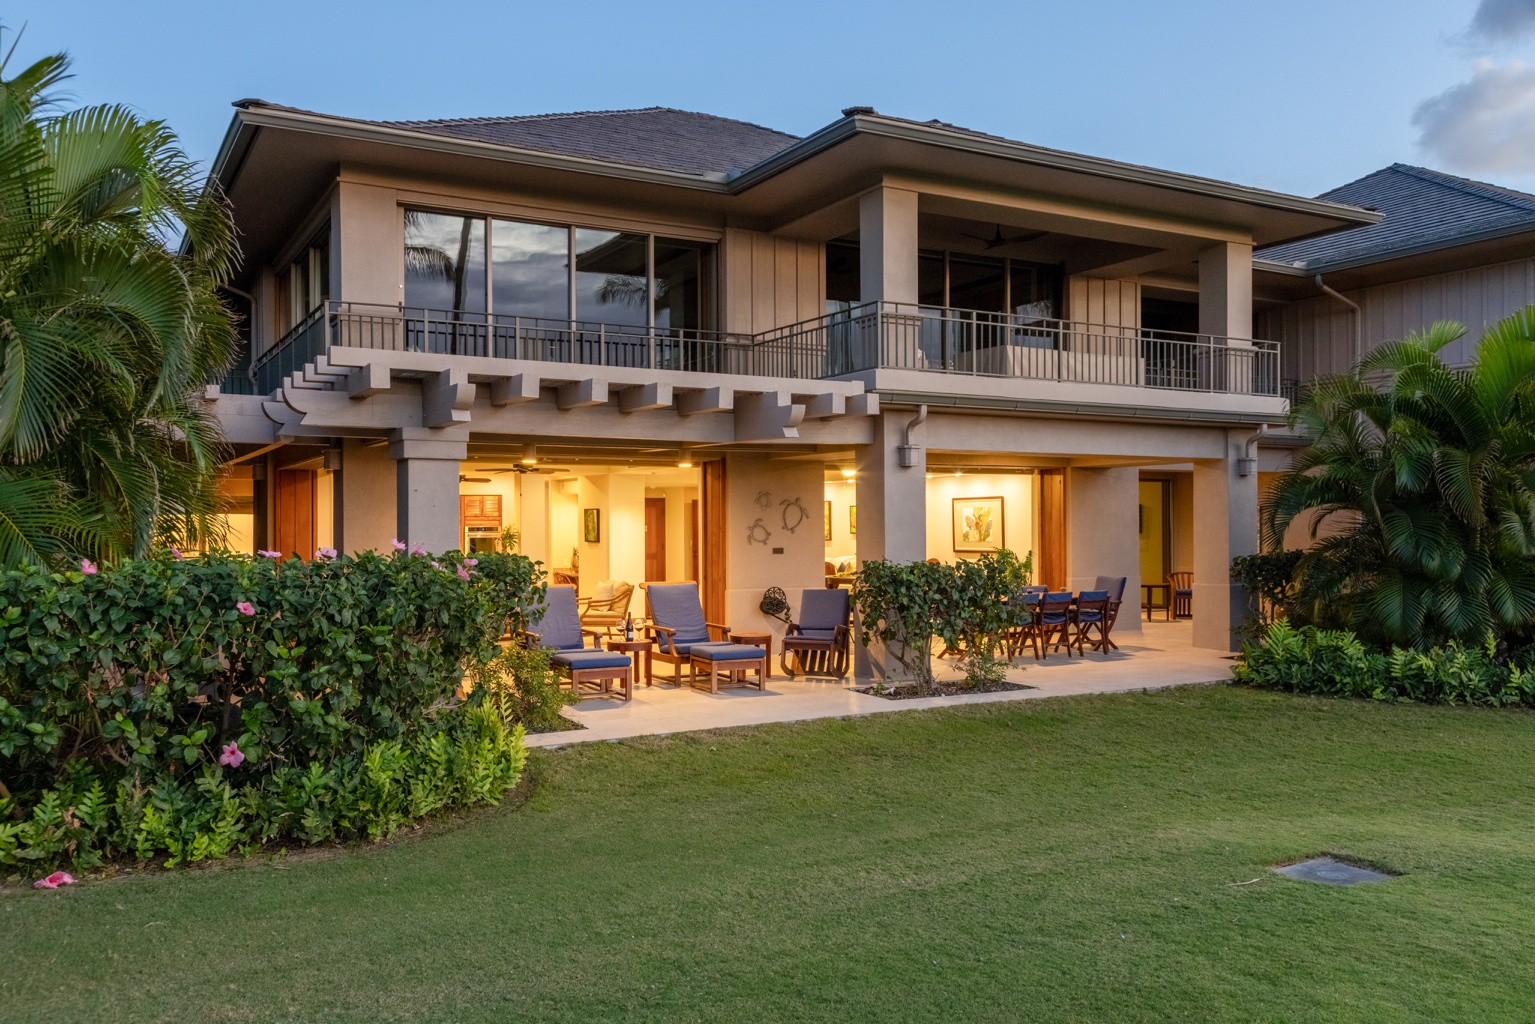 Kailua Kona Vacation Rentals, 3BD Golf Villa (3101) at Four Seasons Resort at Hualalai - Alternate view of your private outdoor living space.